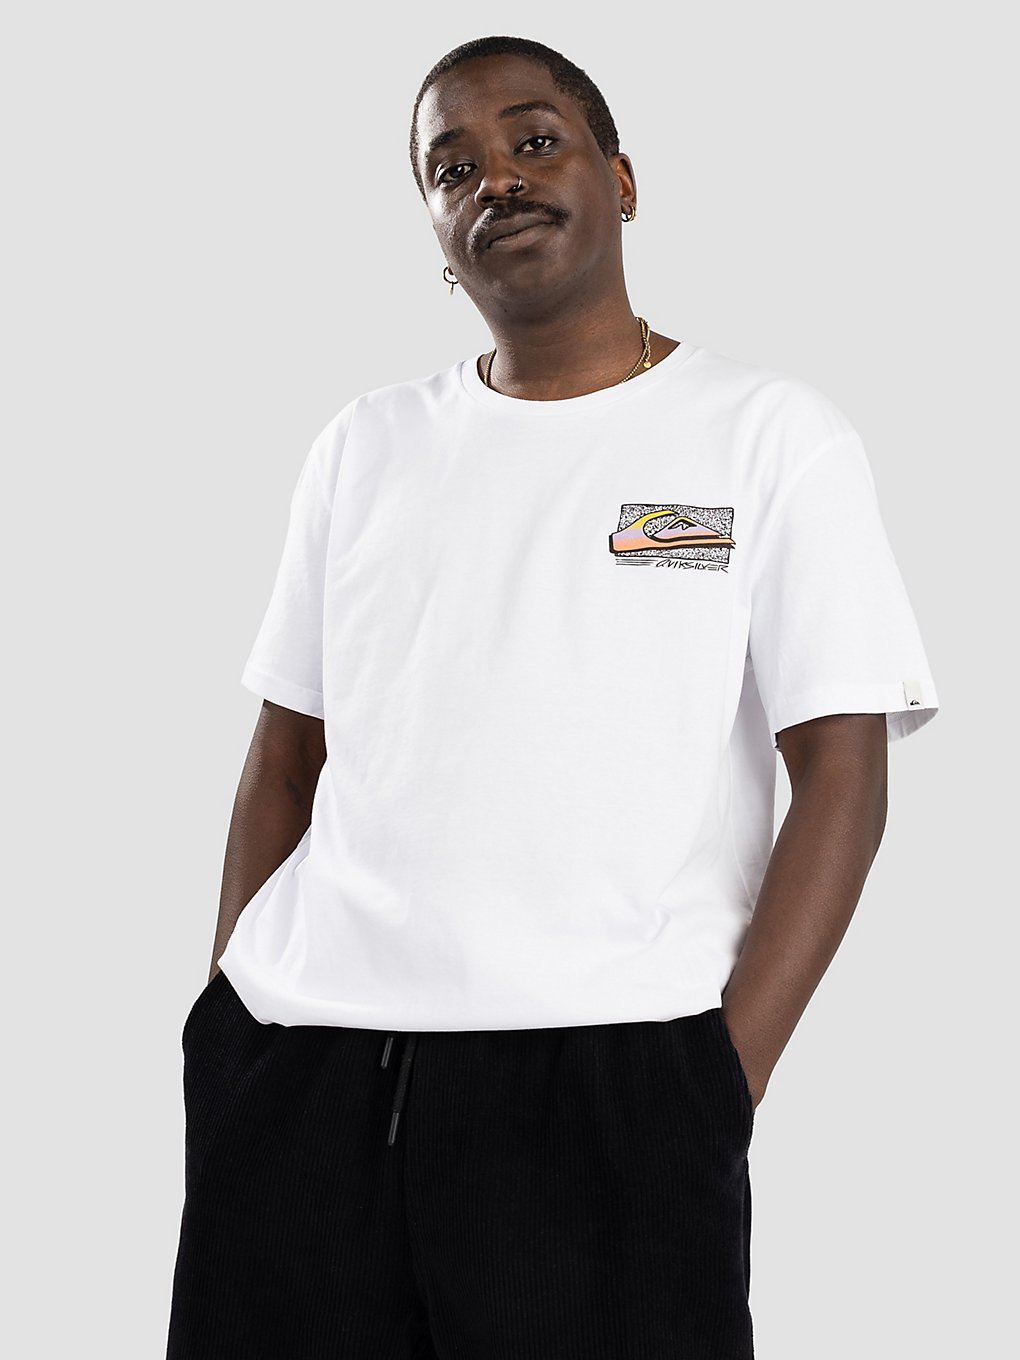 Quiksilver Retro Fade T-Shirt white kaufen